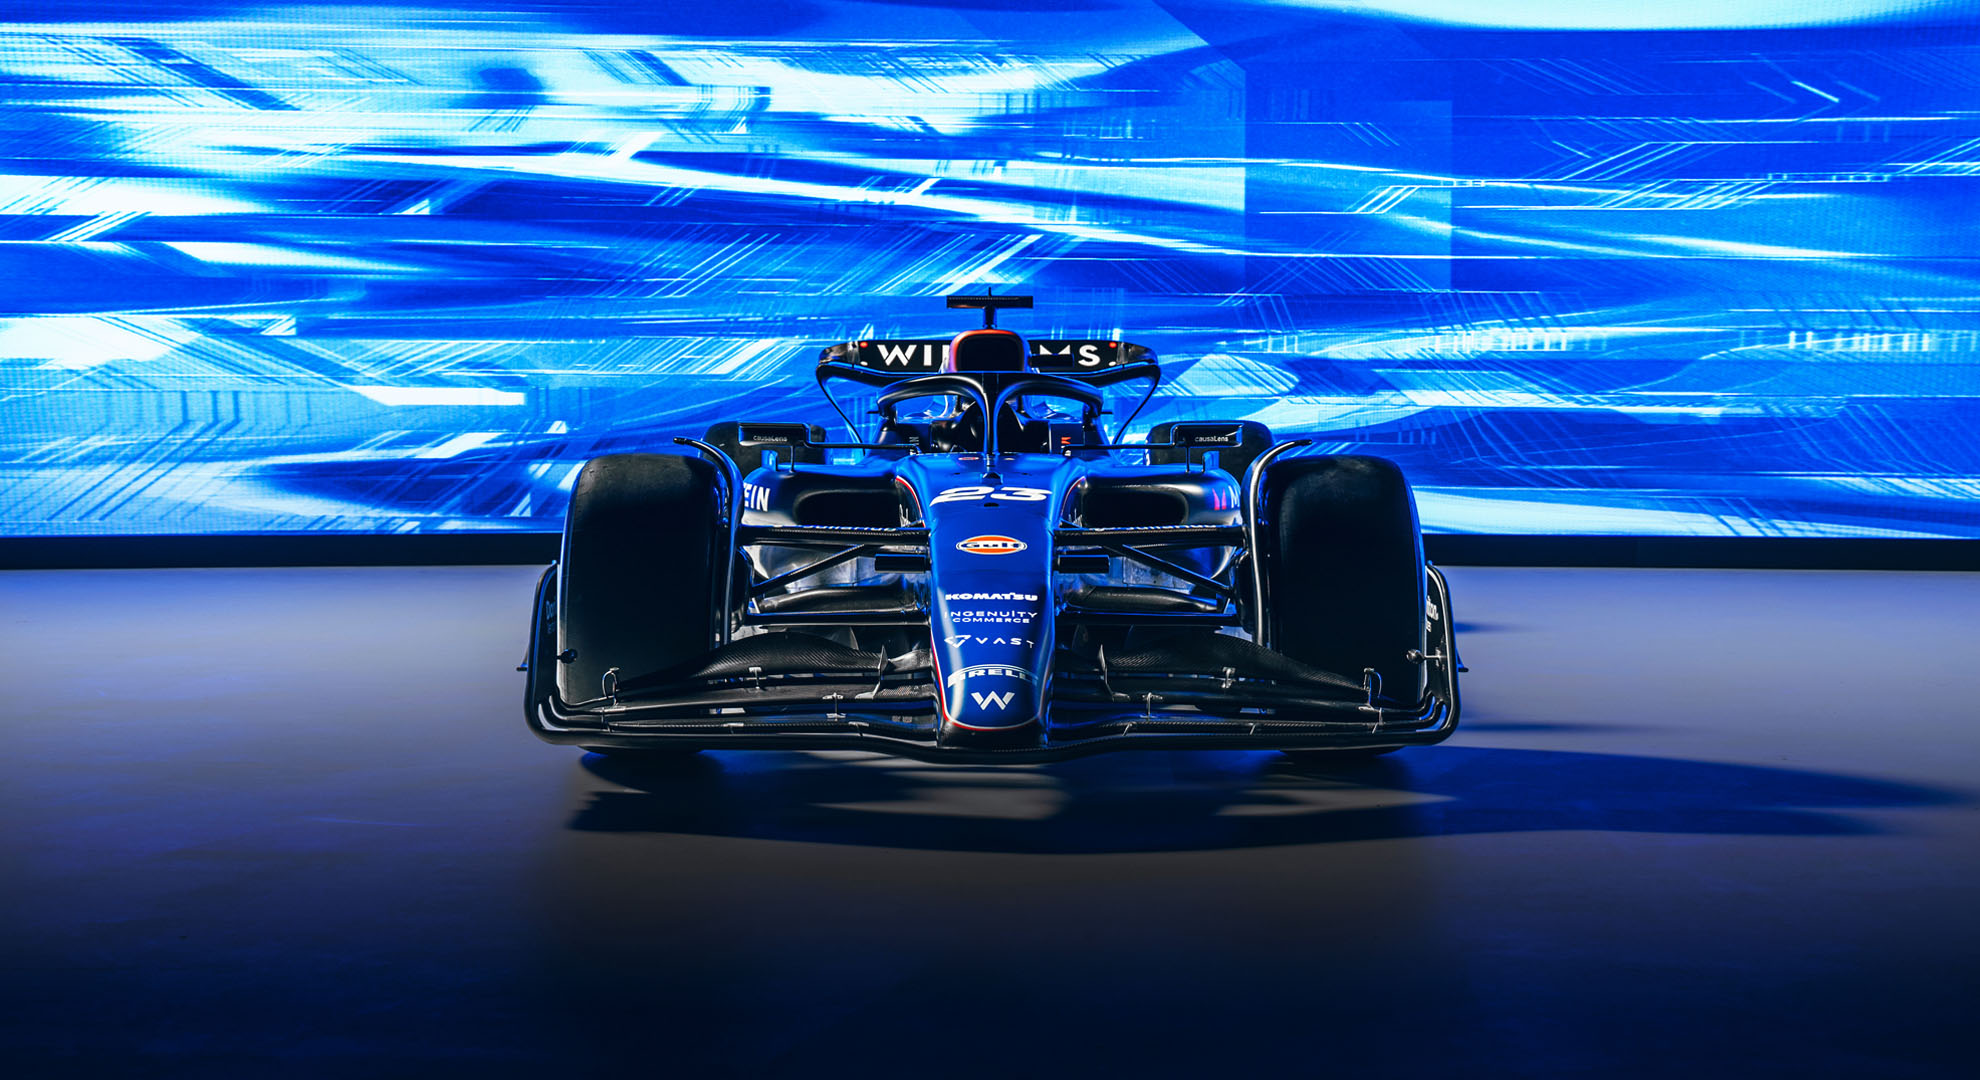 Williams Racing | コマツ 企業サイト